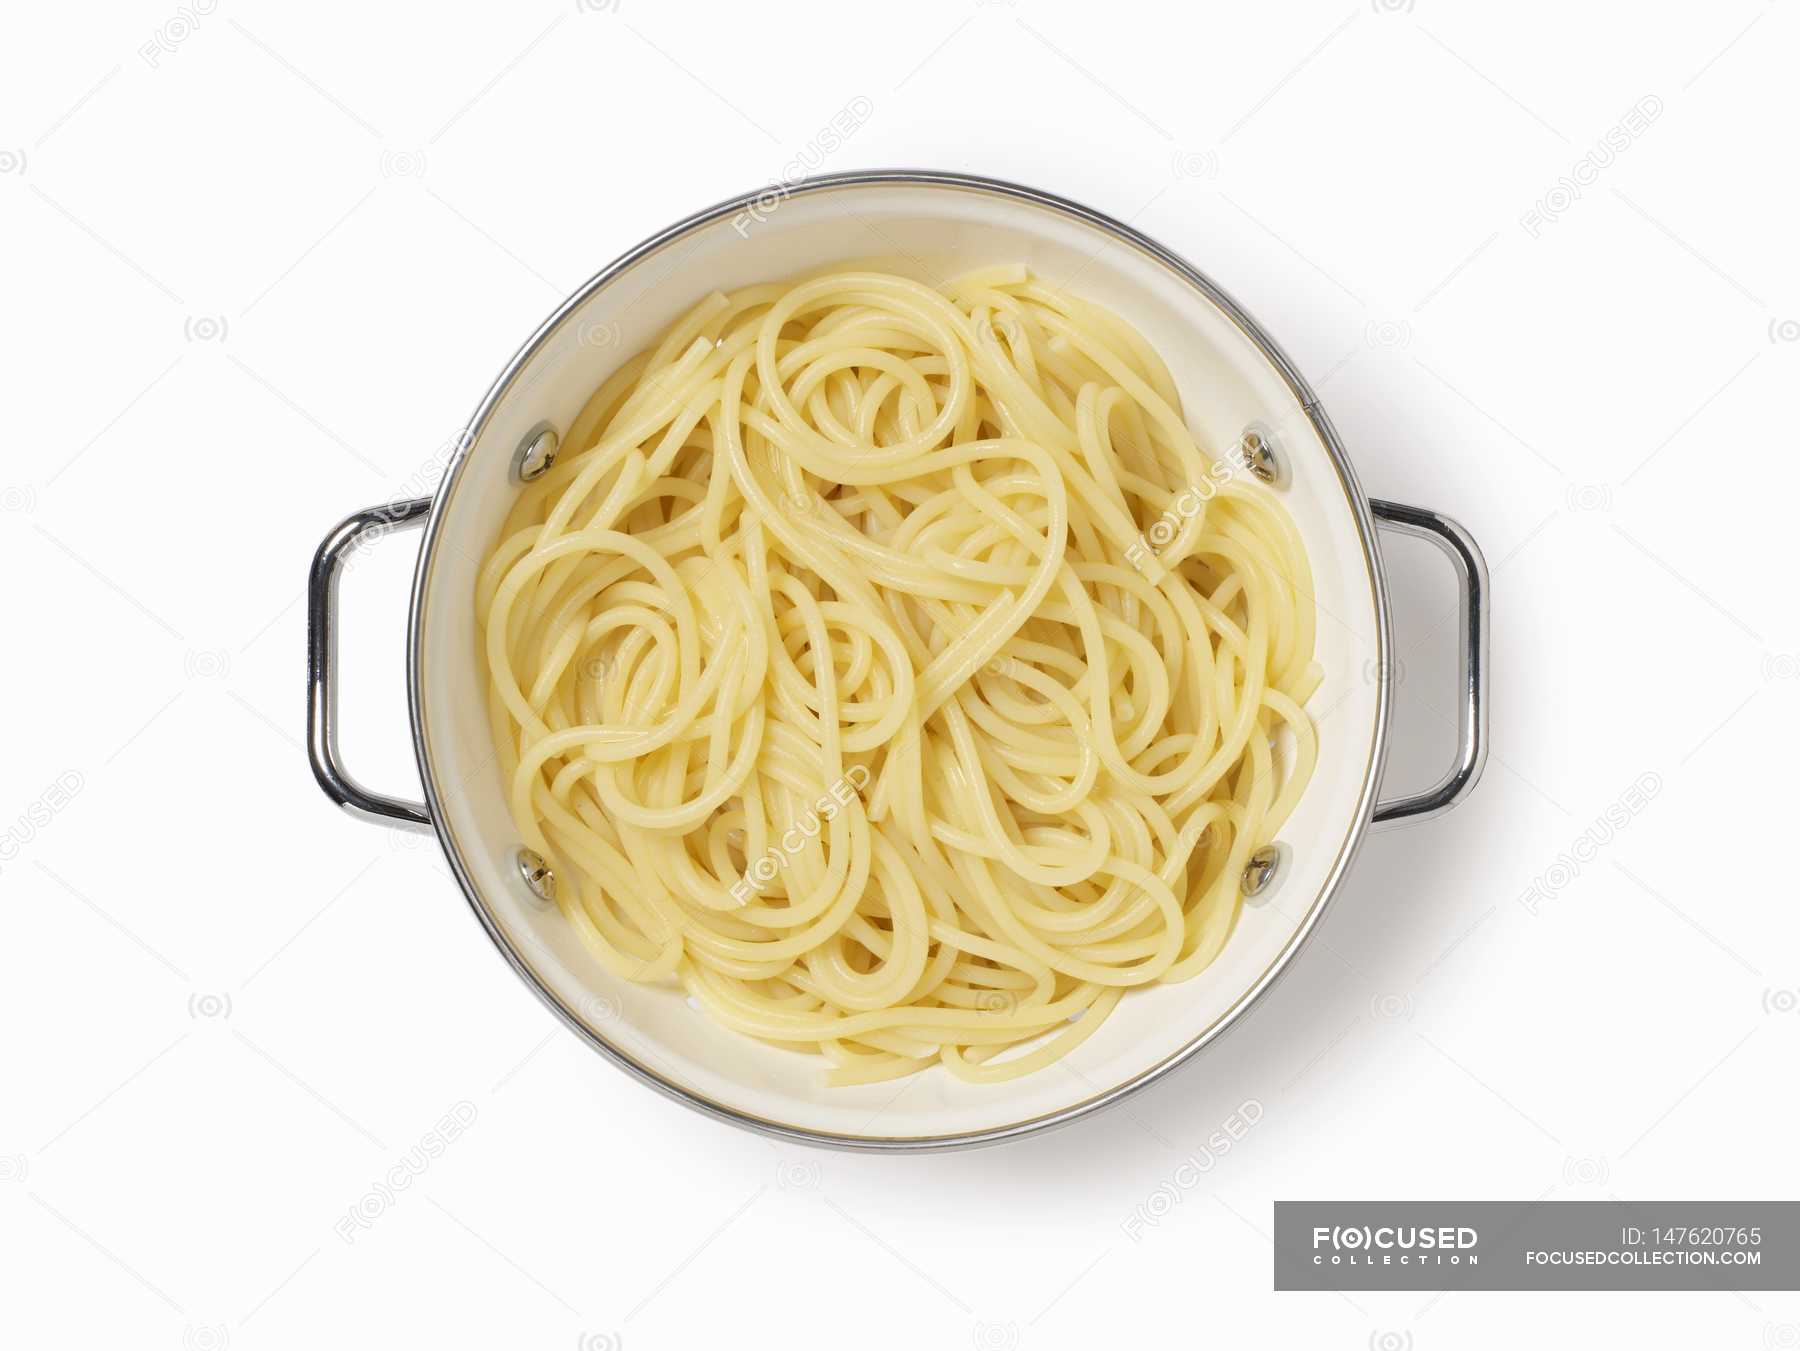 Cooked spaghetti in colander — Stock Photo | #147620765